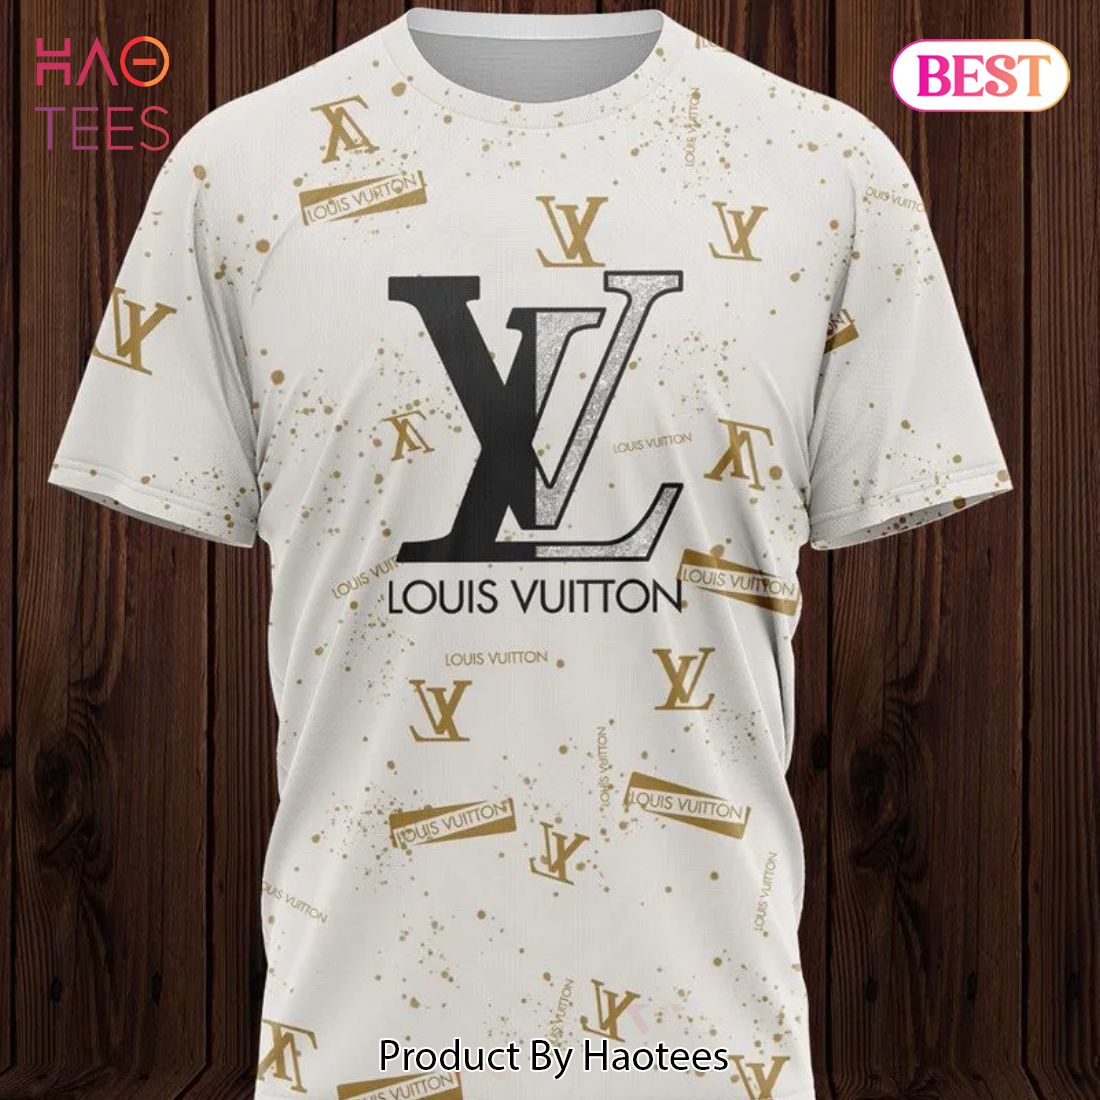 [NEW FASHION] Louis Vuitton Premium Luxury Brand T-Shirt Outfit For Men Women